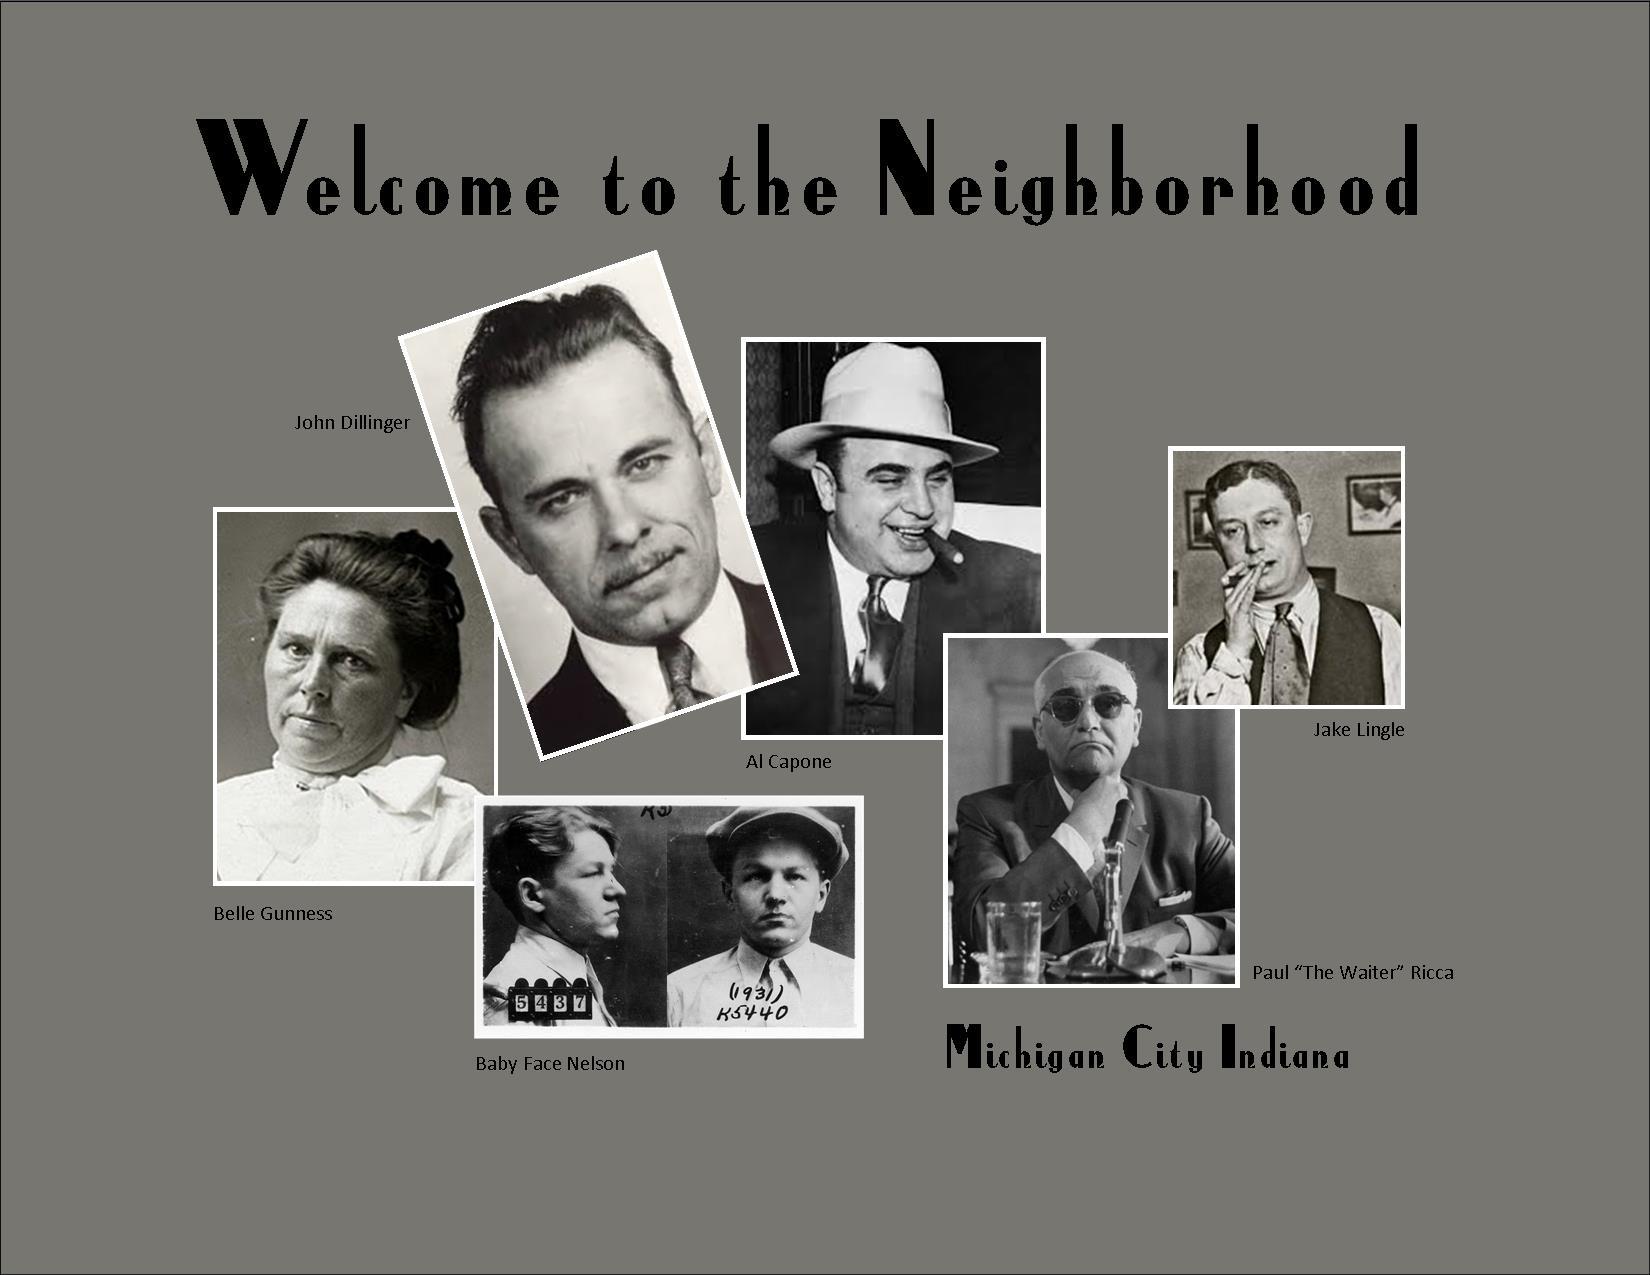 Local Michigan City celebrities: Belle Gunness, John Dillinger, Al Capone, Baby Face Nelson, Jake Lingle, Paul "The Waiter" Ricca